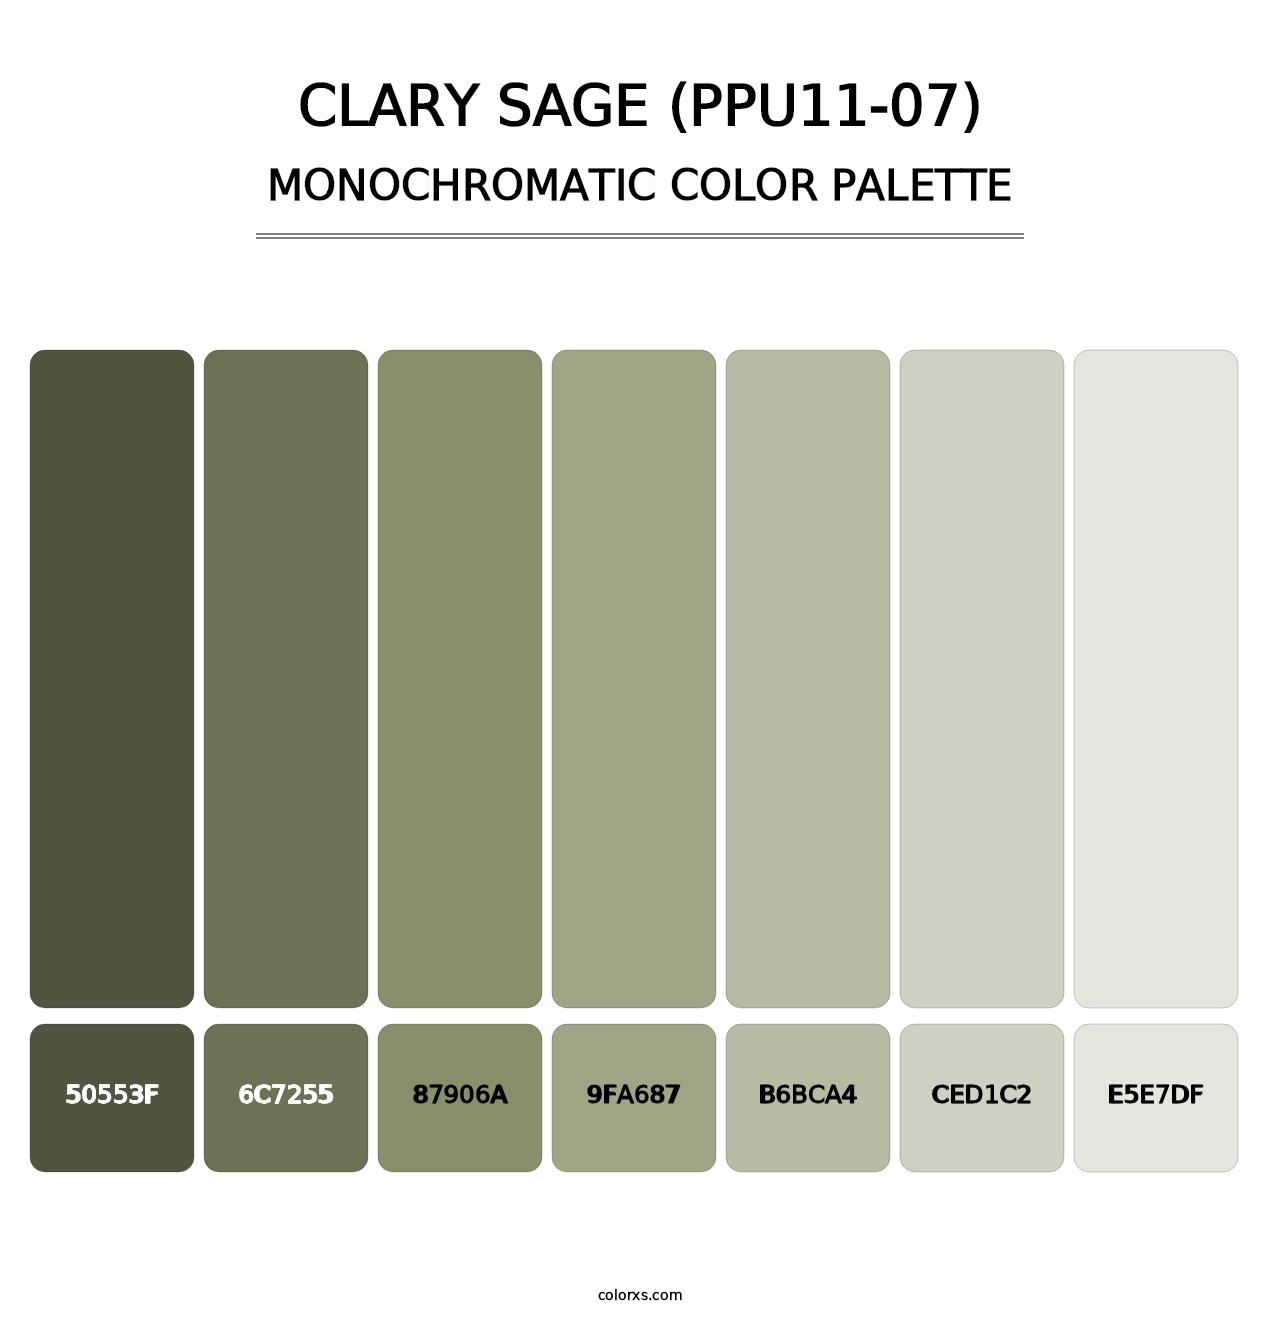 Clary Sage (PPU11-07) - Monochromatic Color Palette